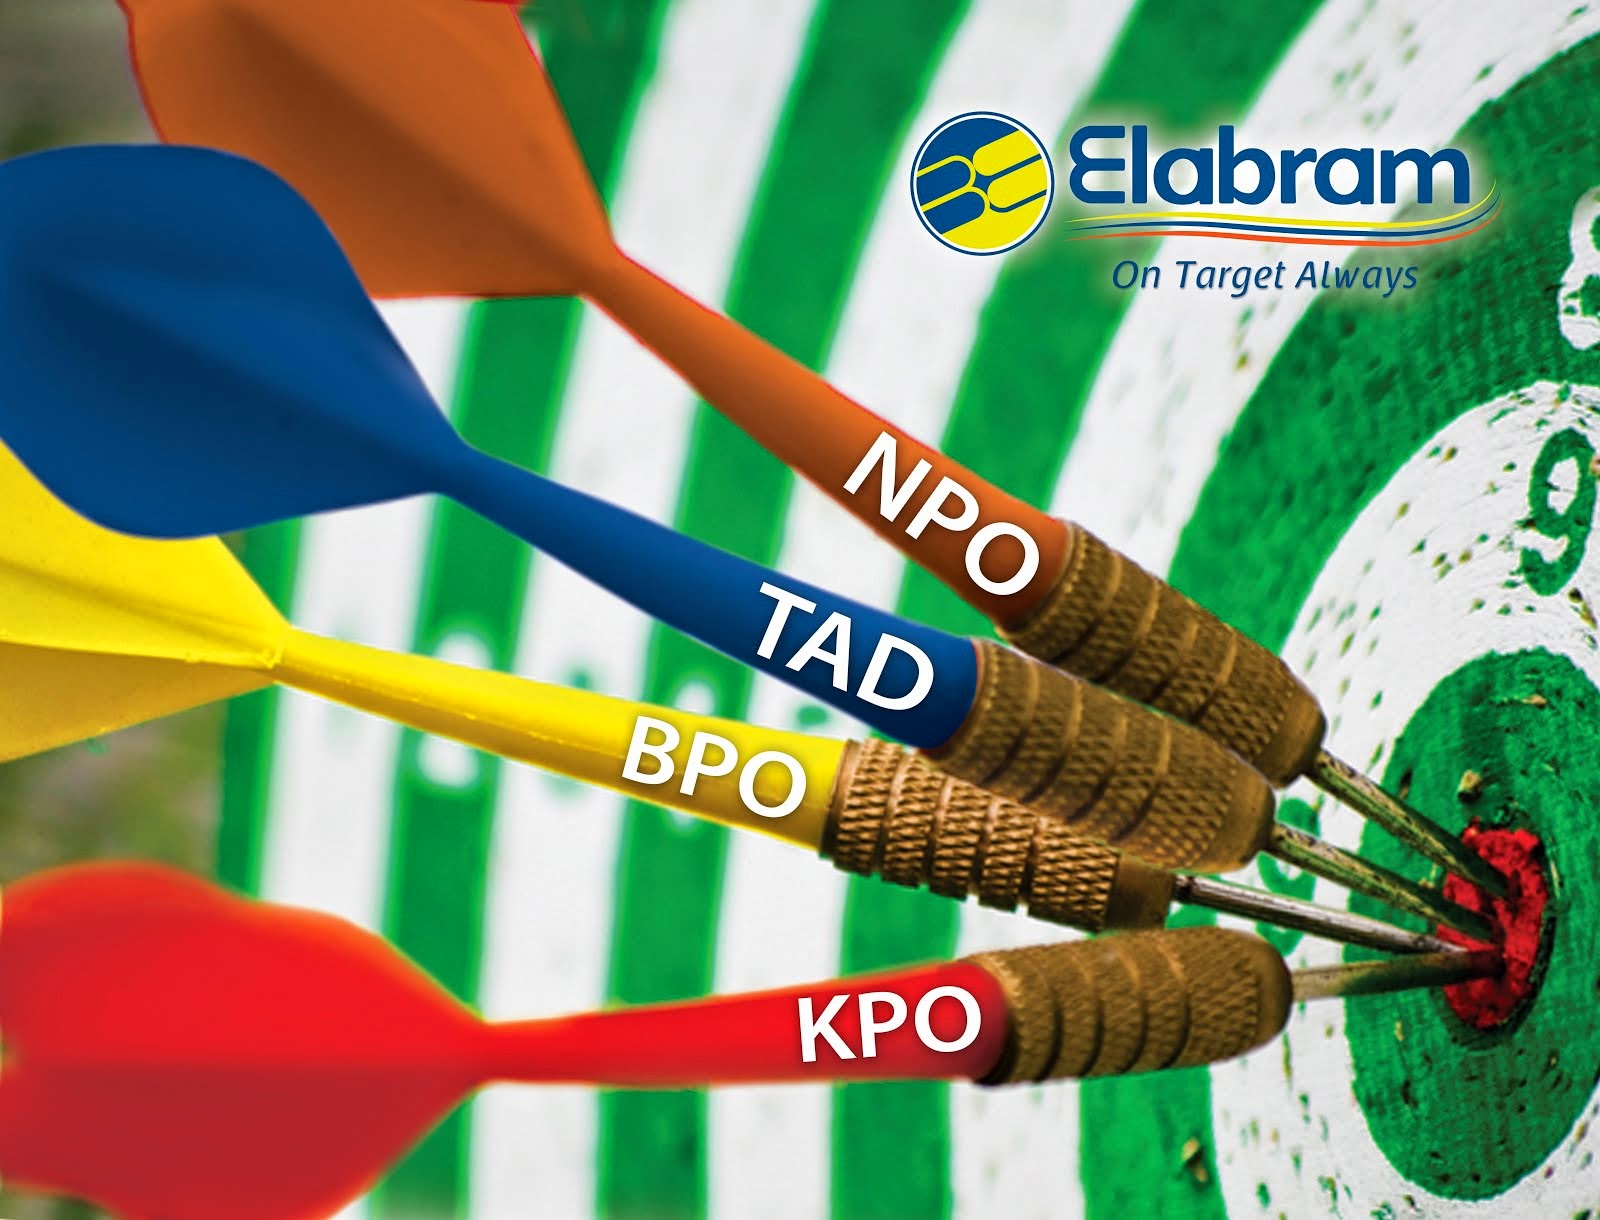 Check our solutions; NPO-TAD-BPO-KPO